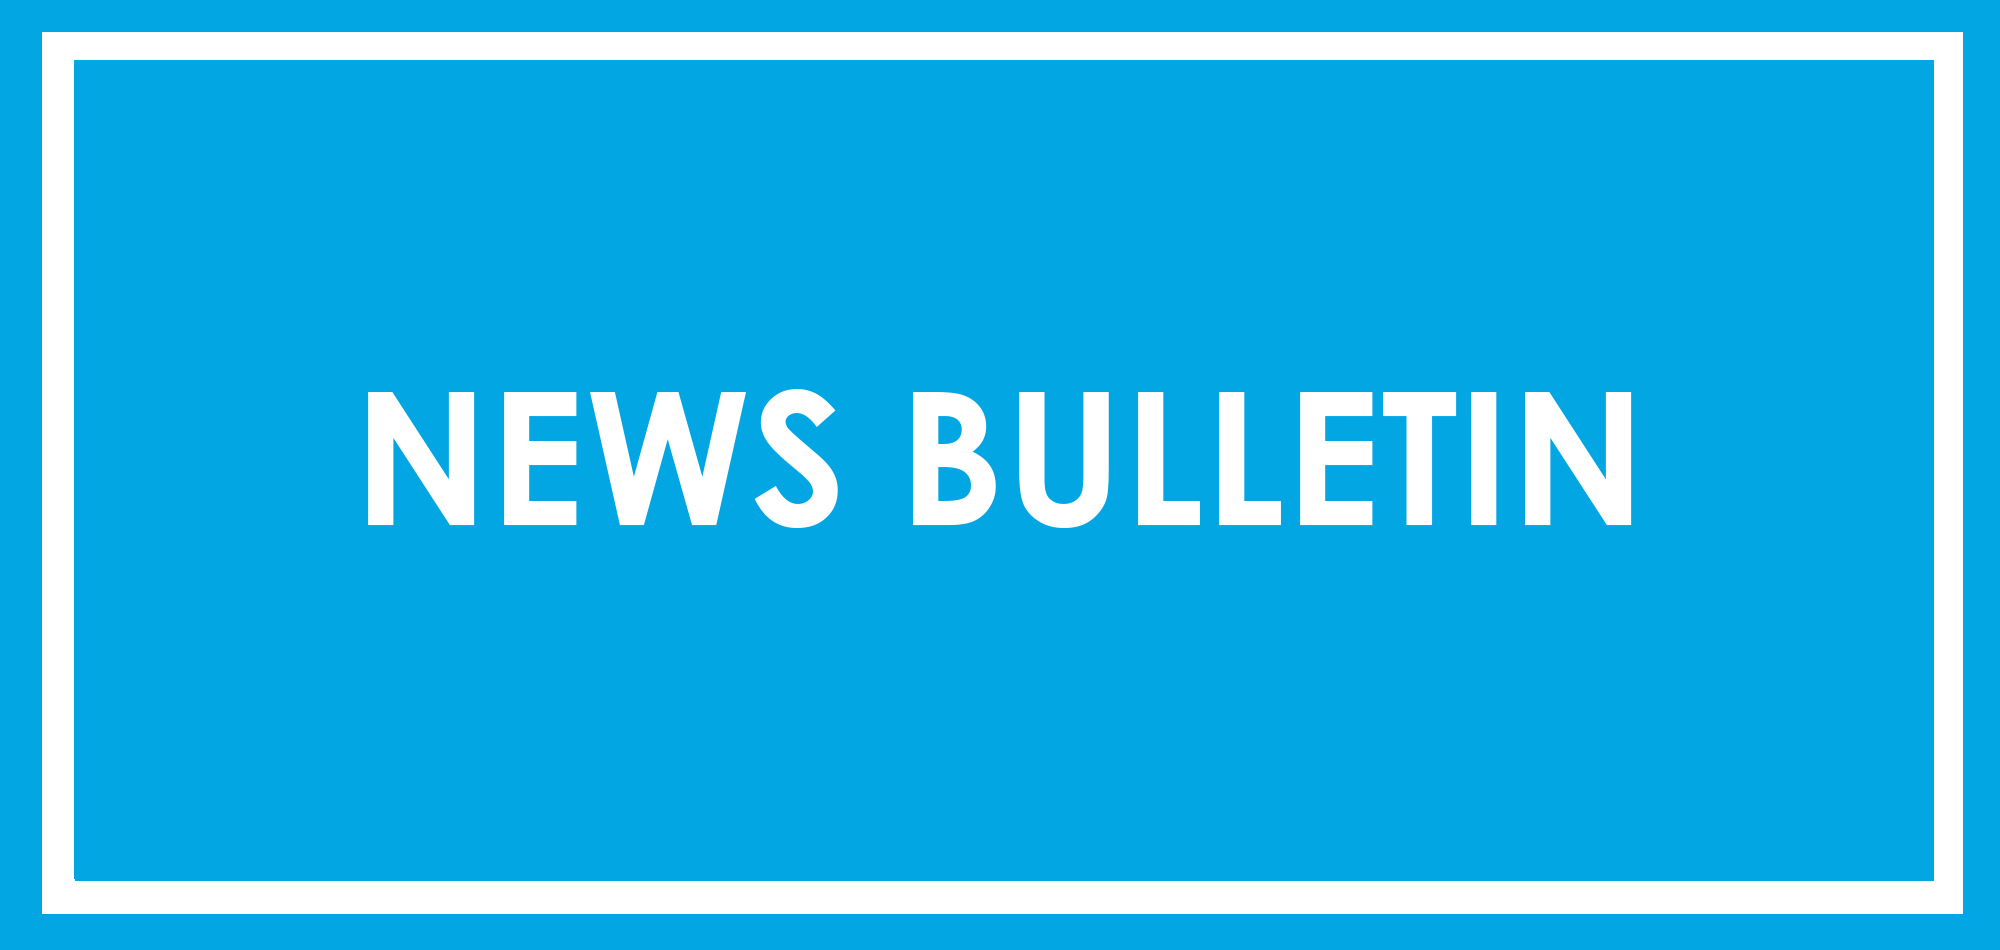 News Bulletin - 08.04.21